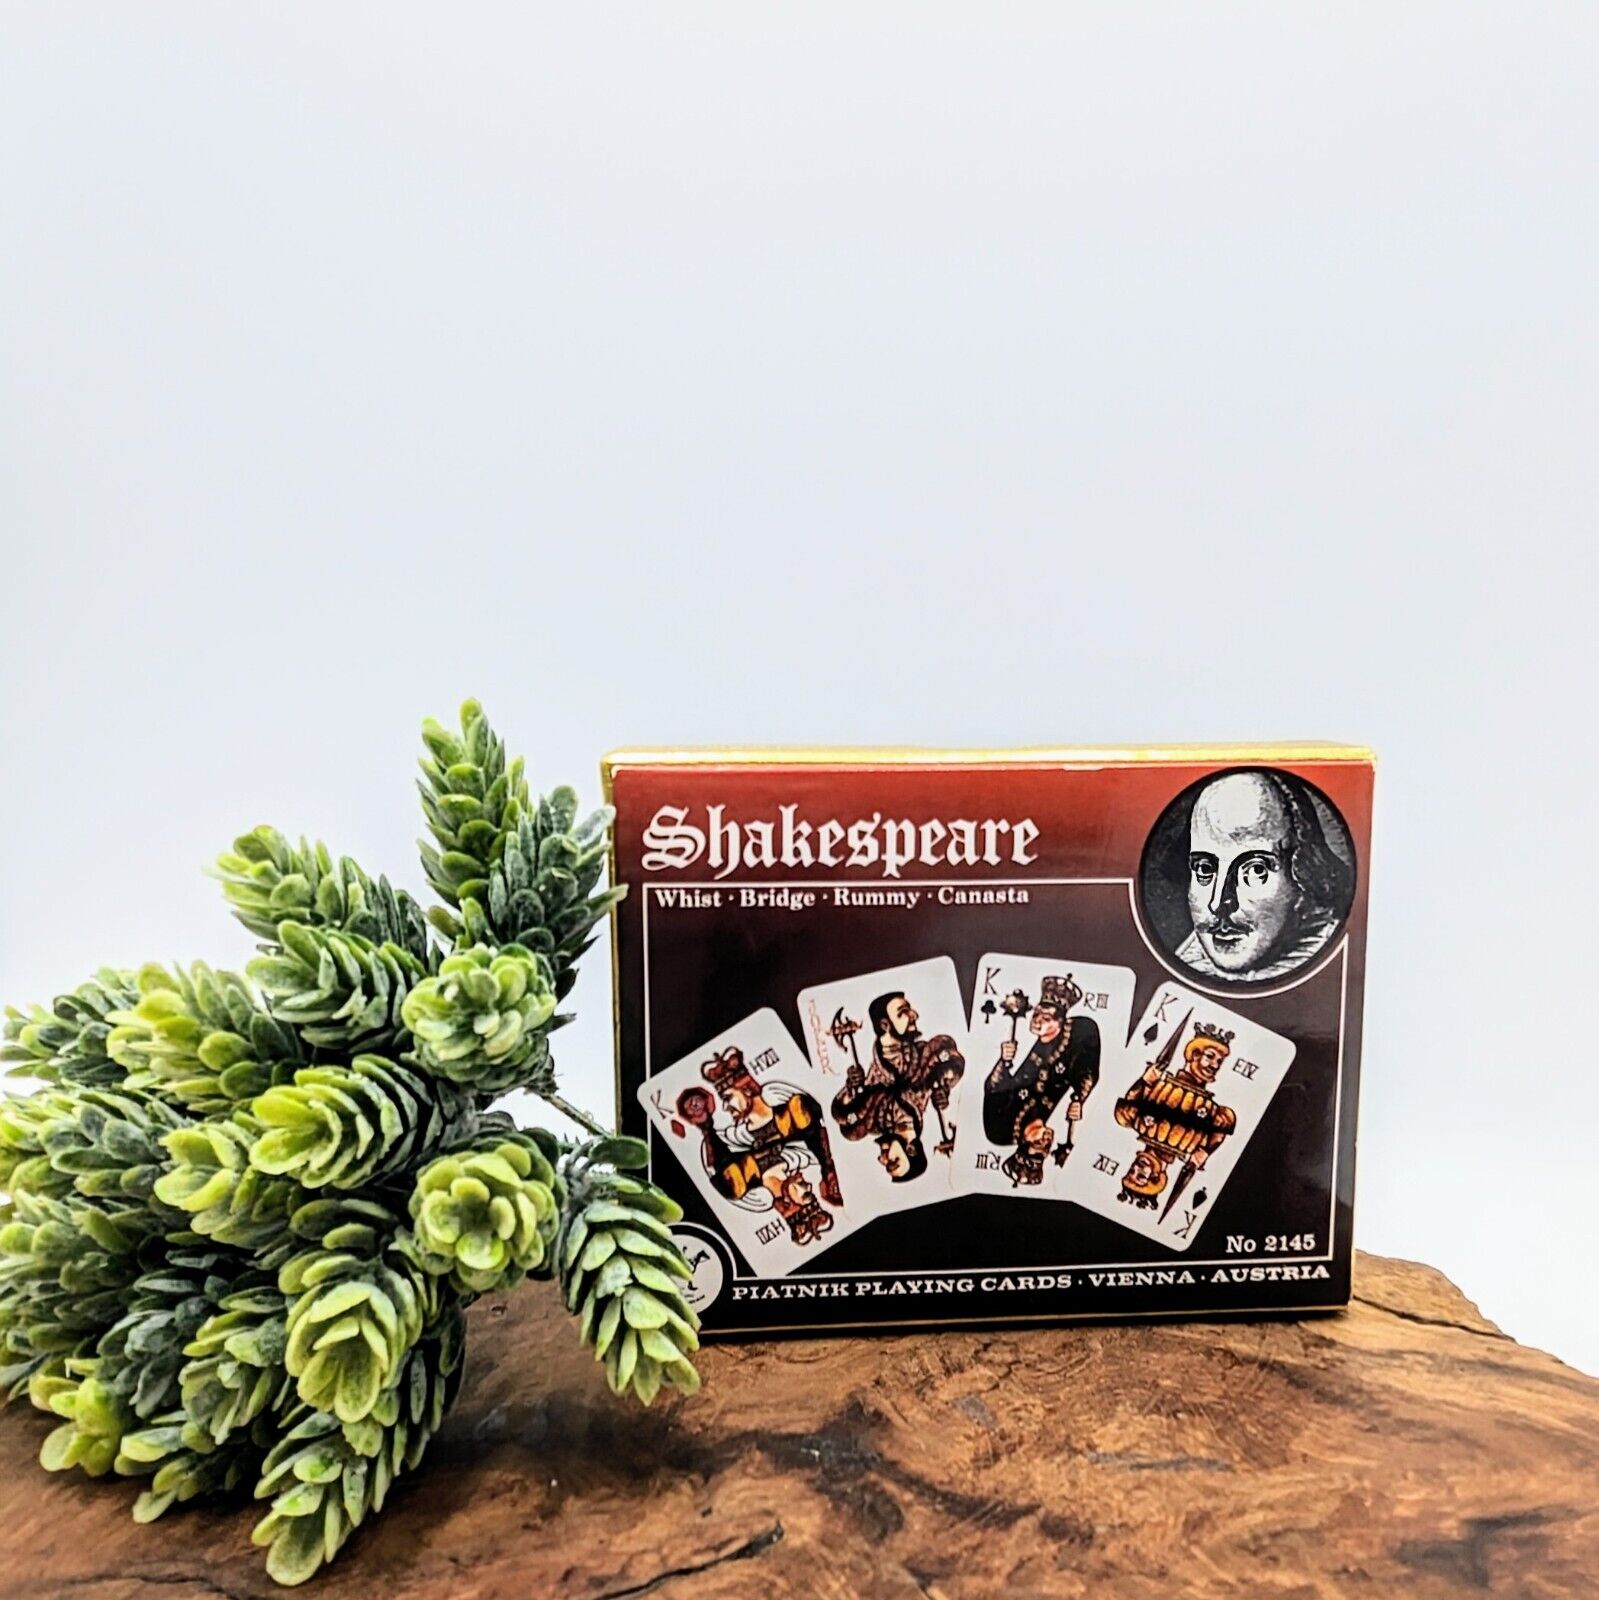 Shakespeare Piatnik Playing Cards Bridge Whist Rummy Canasta Vienna 2145